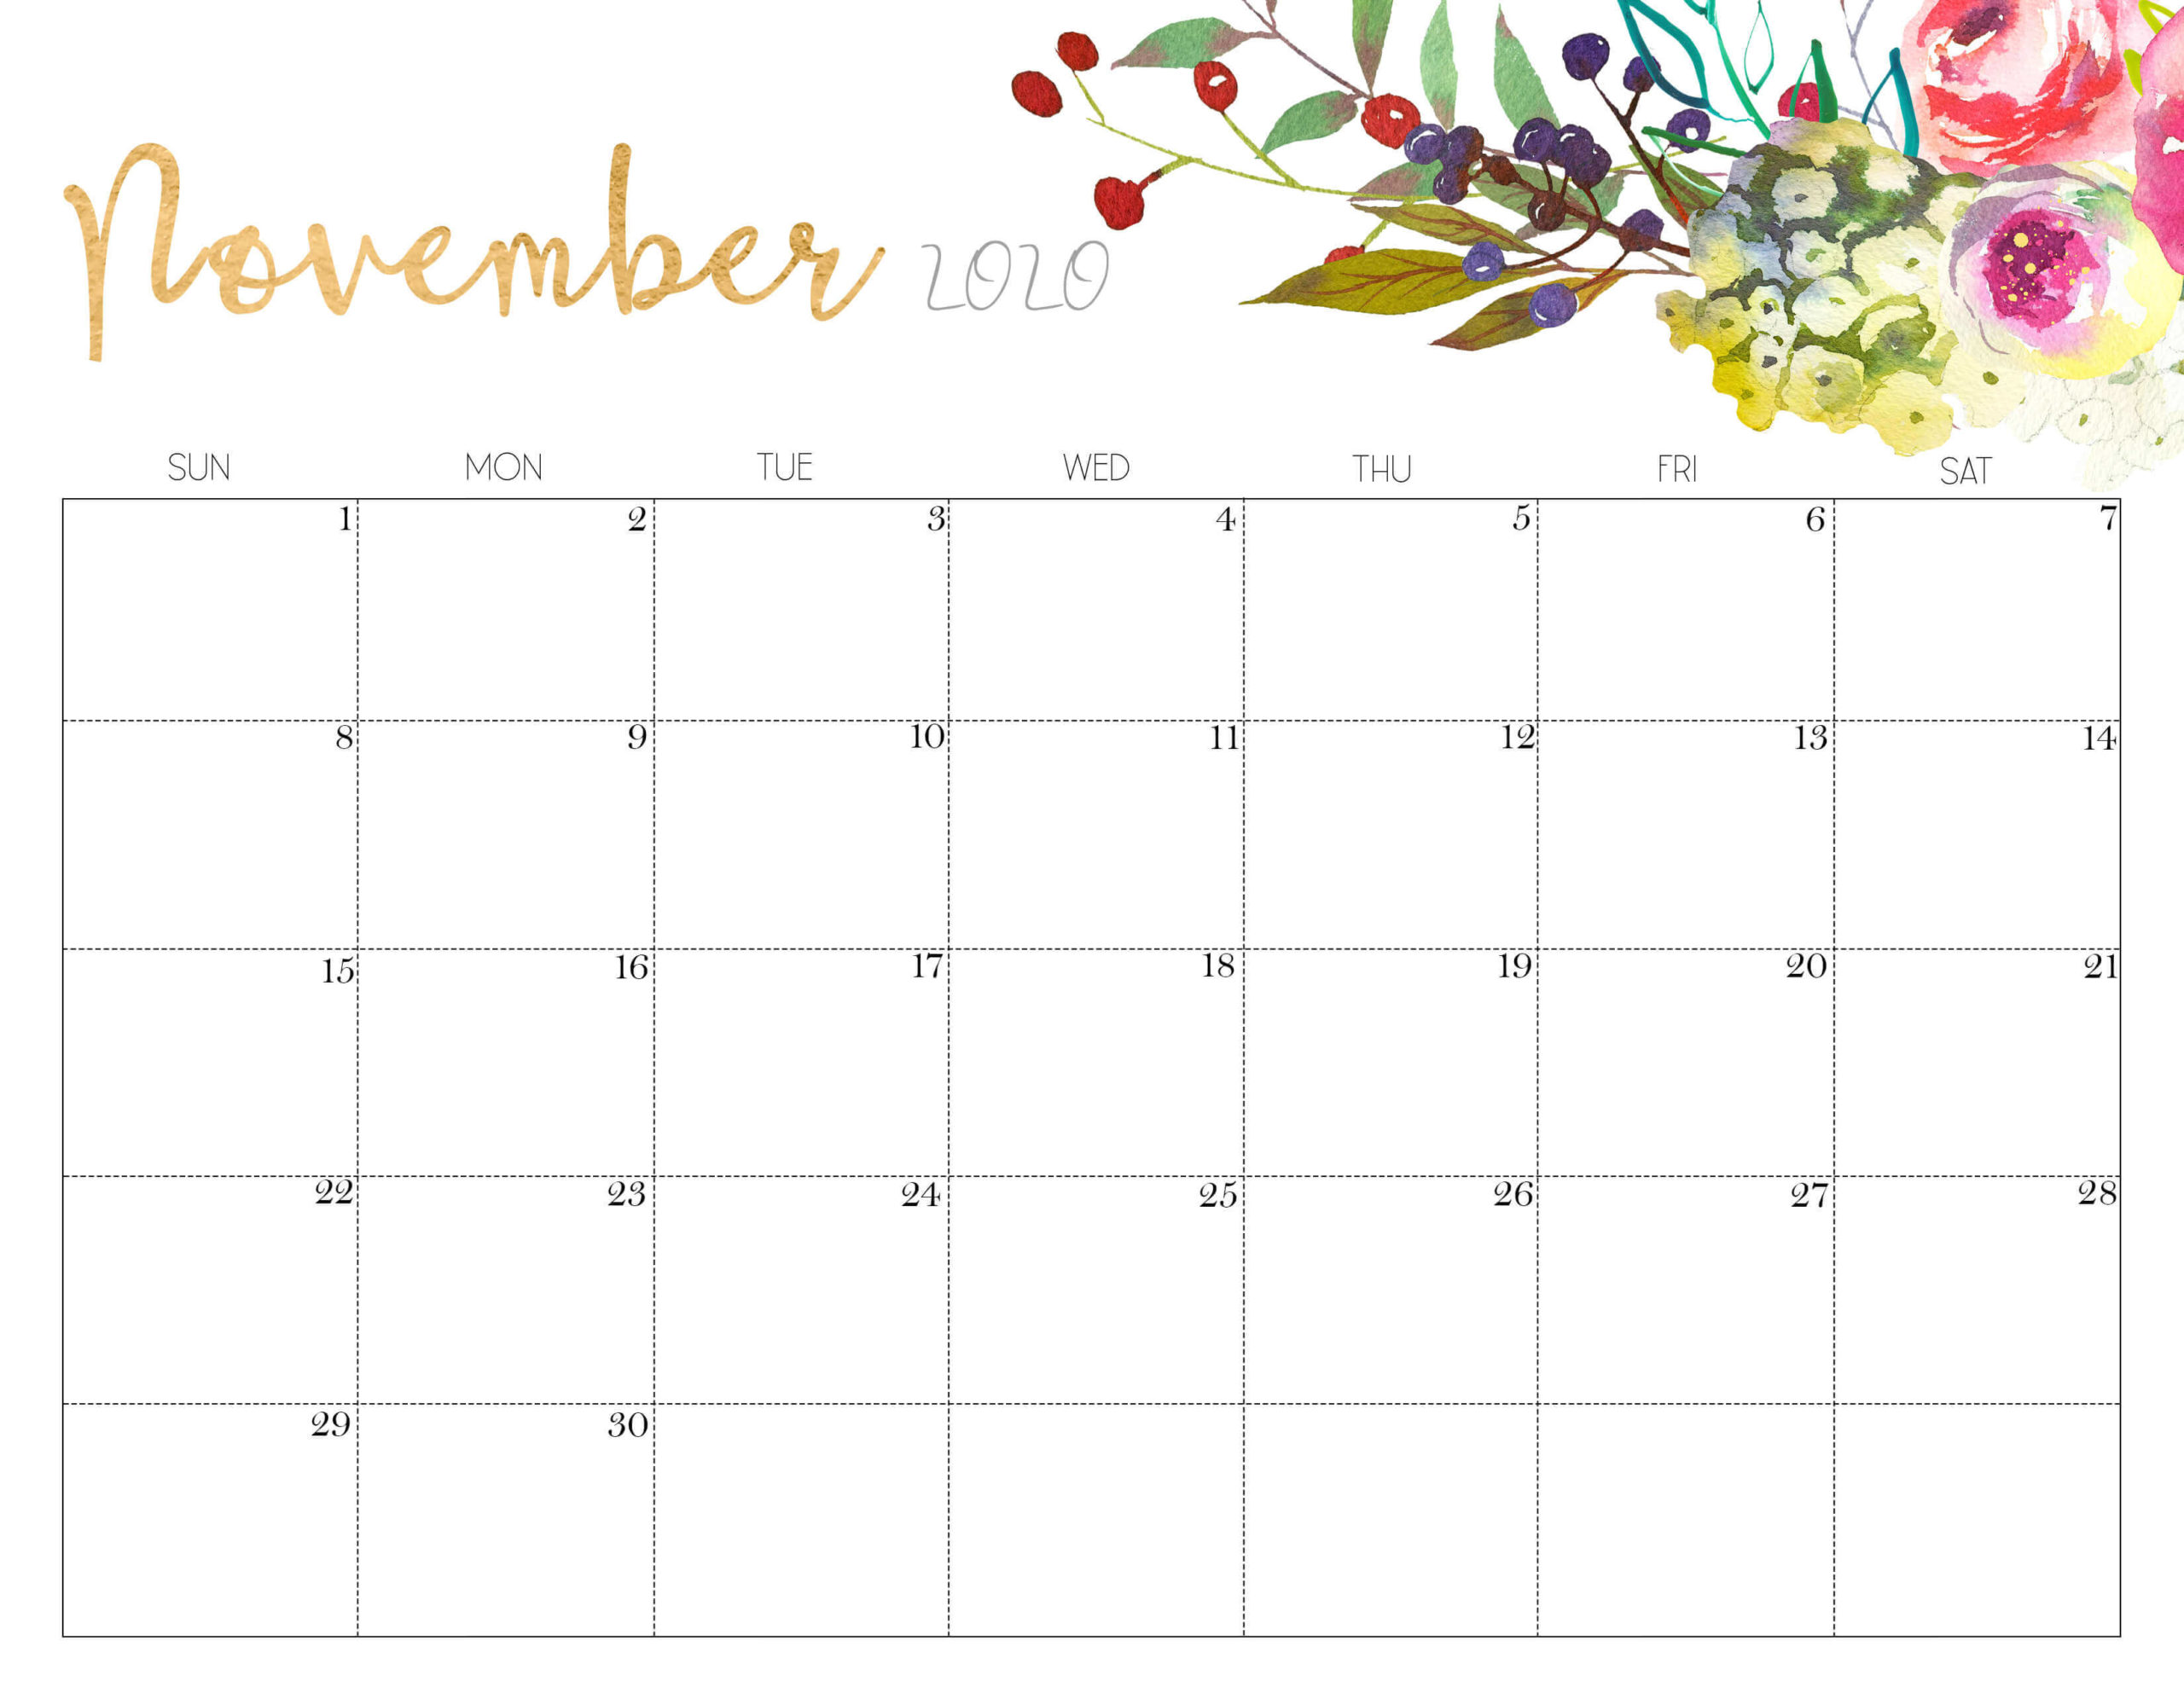 Cute November 2020 Calendar